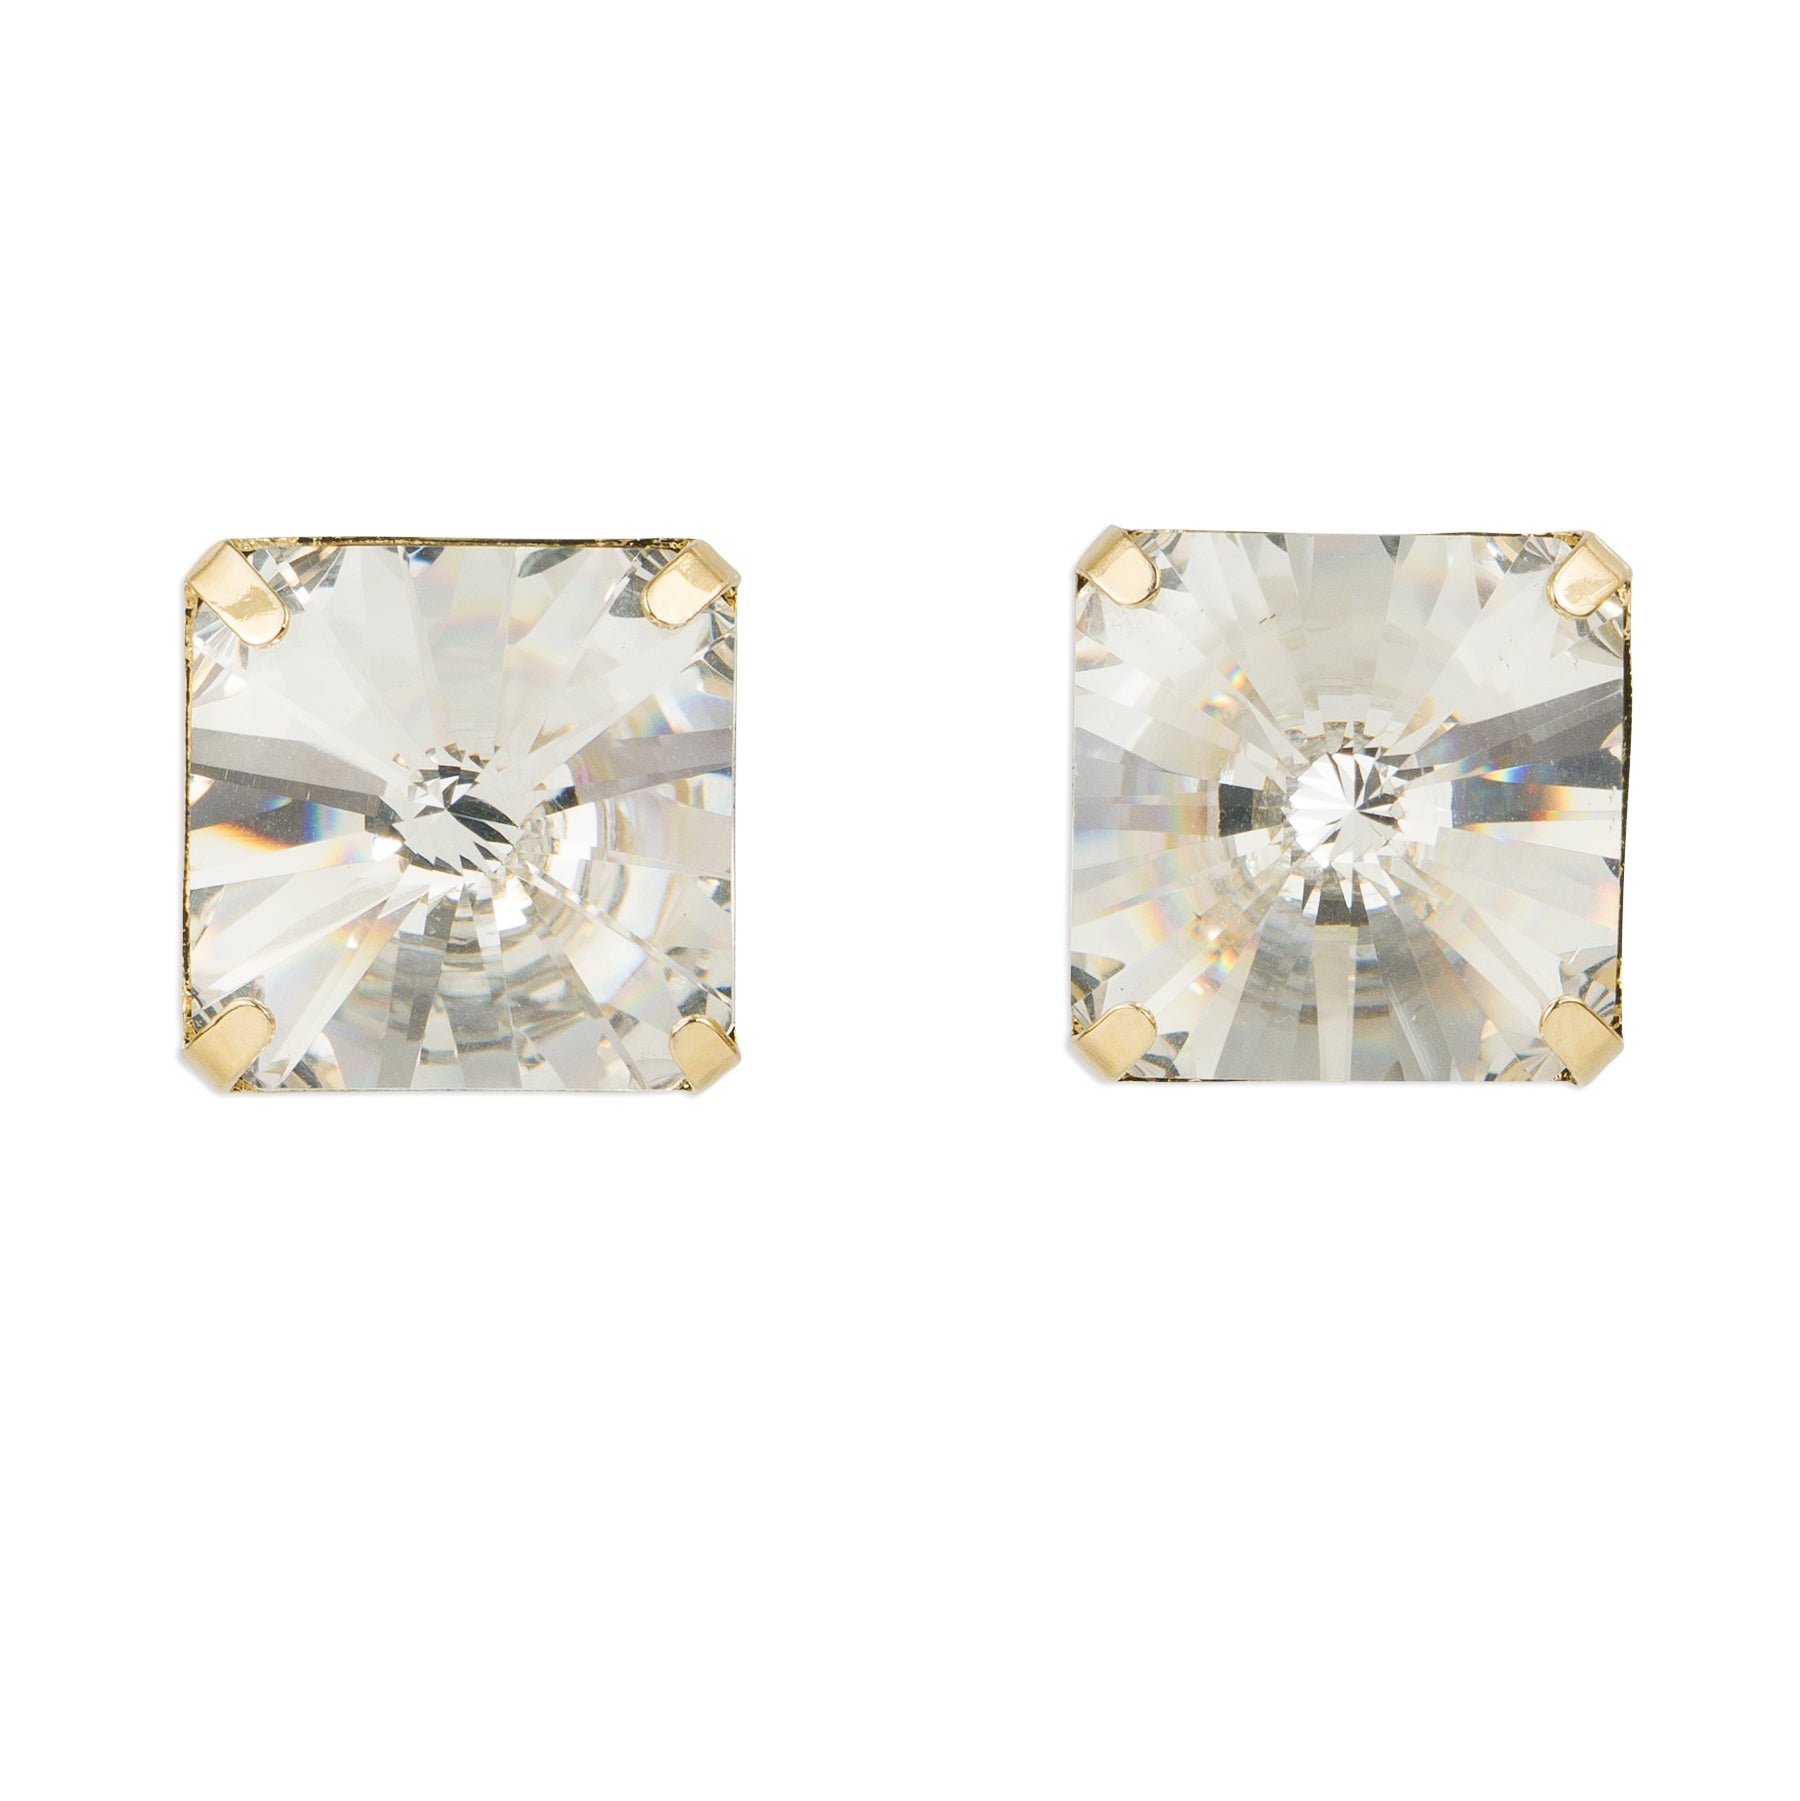 Swarovski crystal square earrings